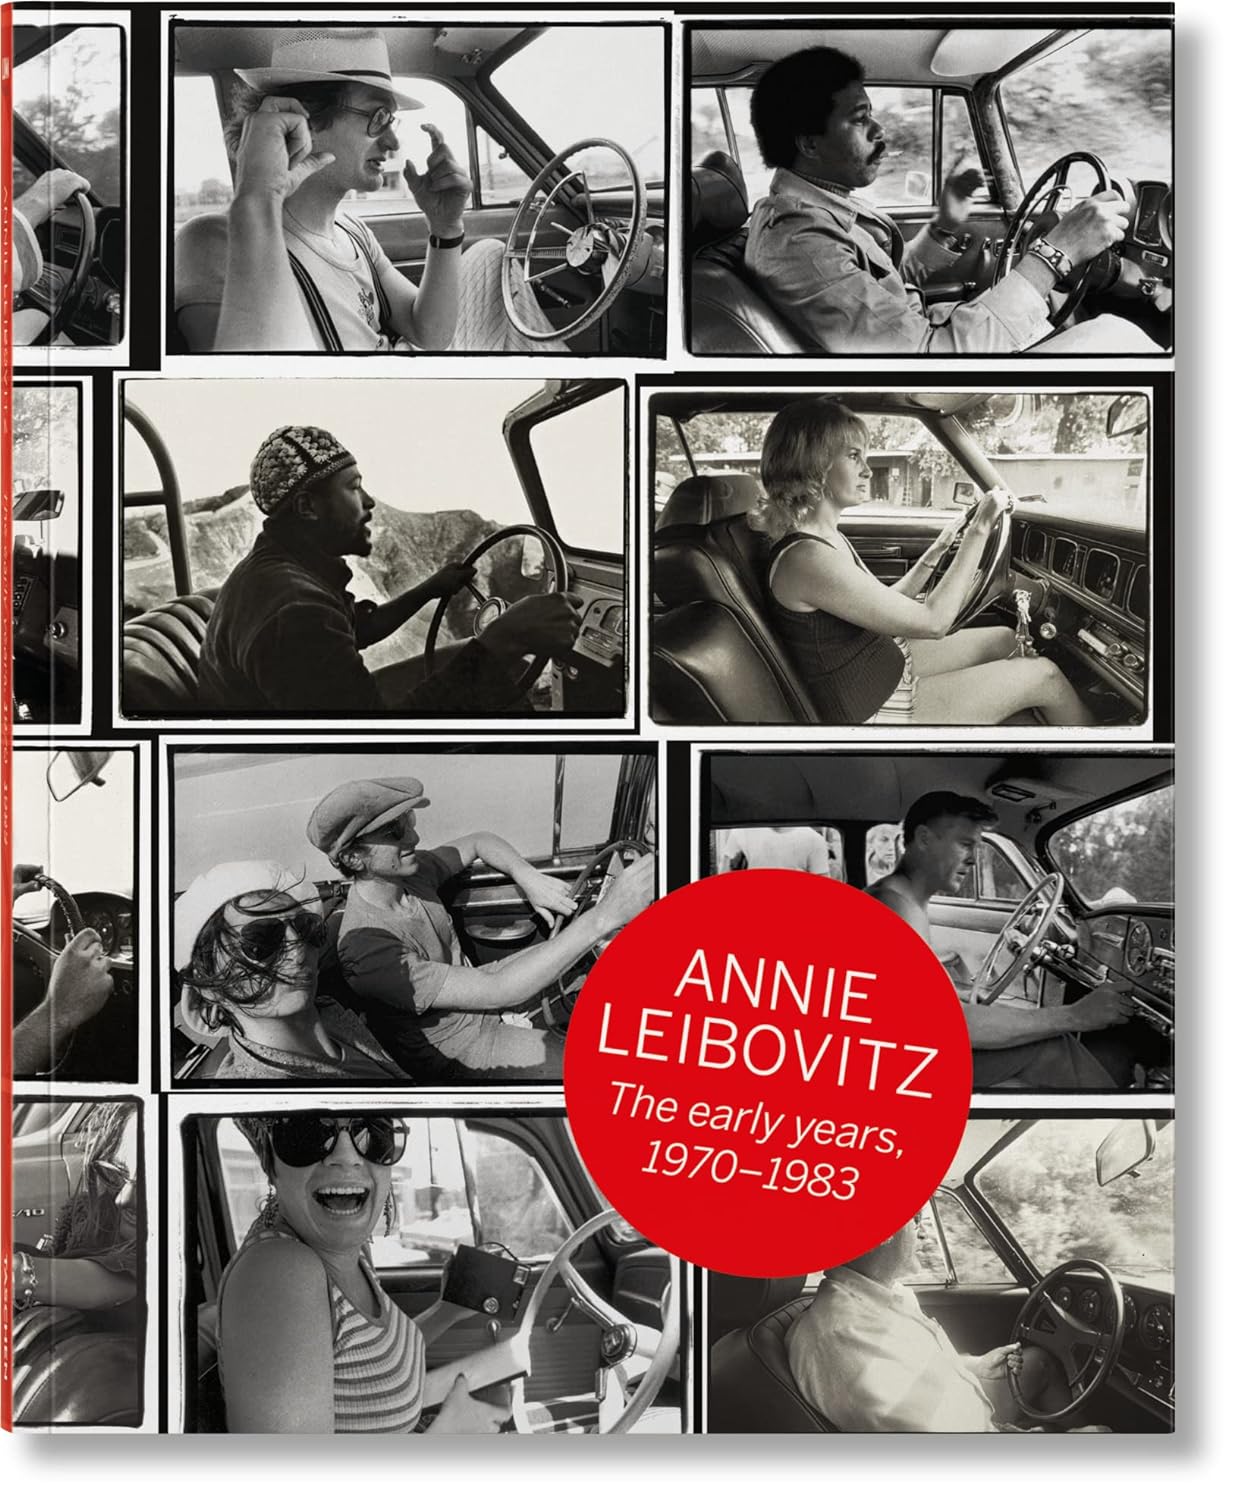 leibovitz annie annie leibovitz the early years 1970 1983 Leibovitz Annie Annie Leibovitz: The Early Years, 1970-1983